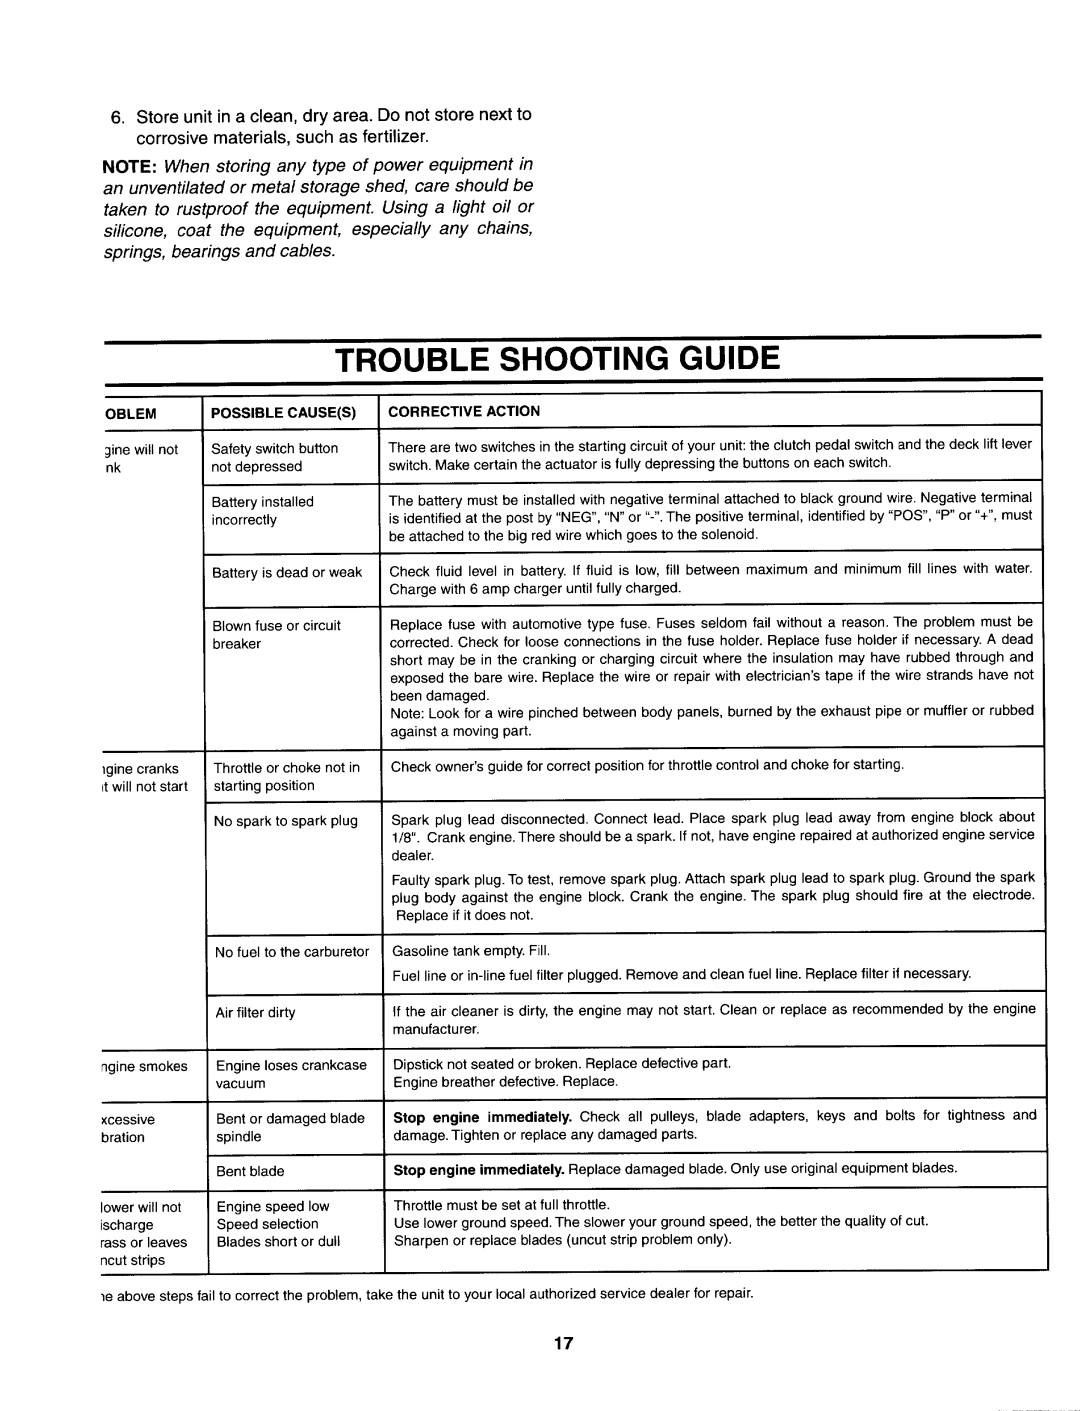 Yard Machines 690, 699 manual Trouble Shooting Guide 